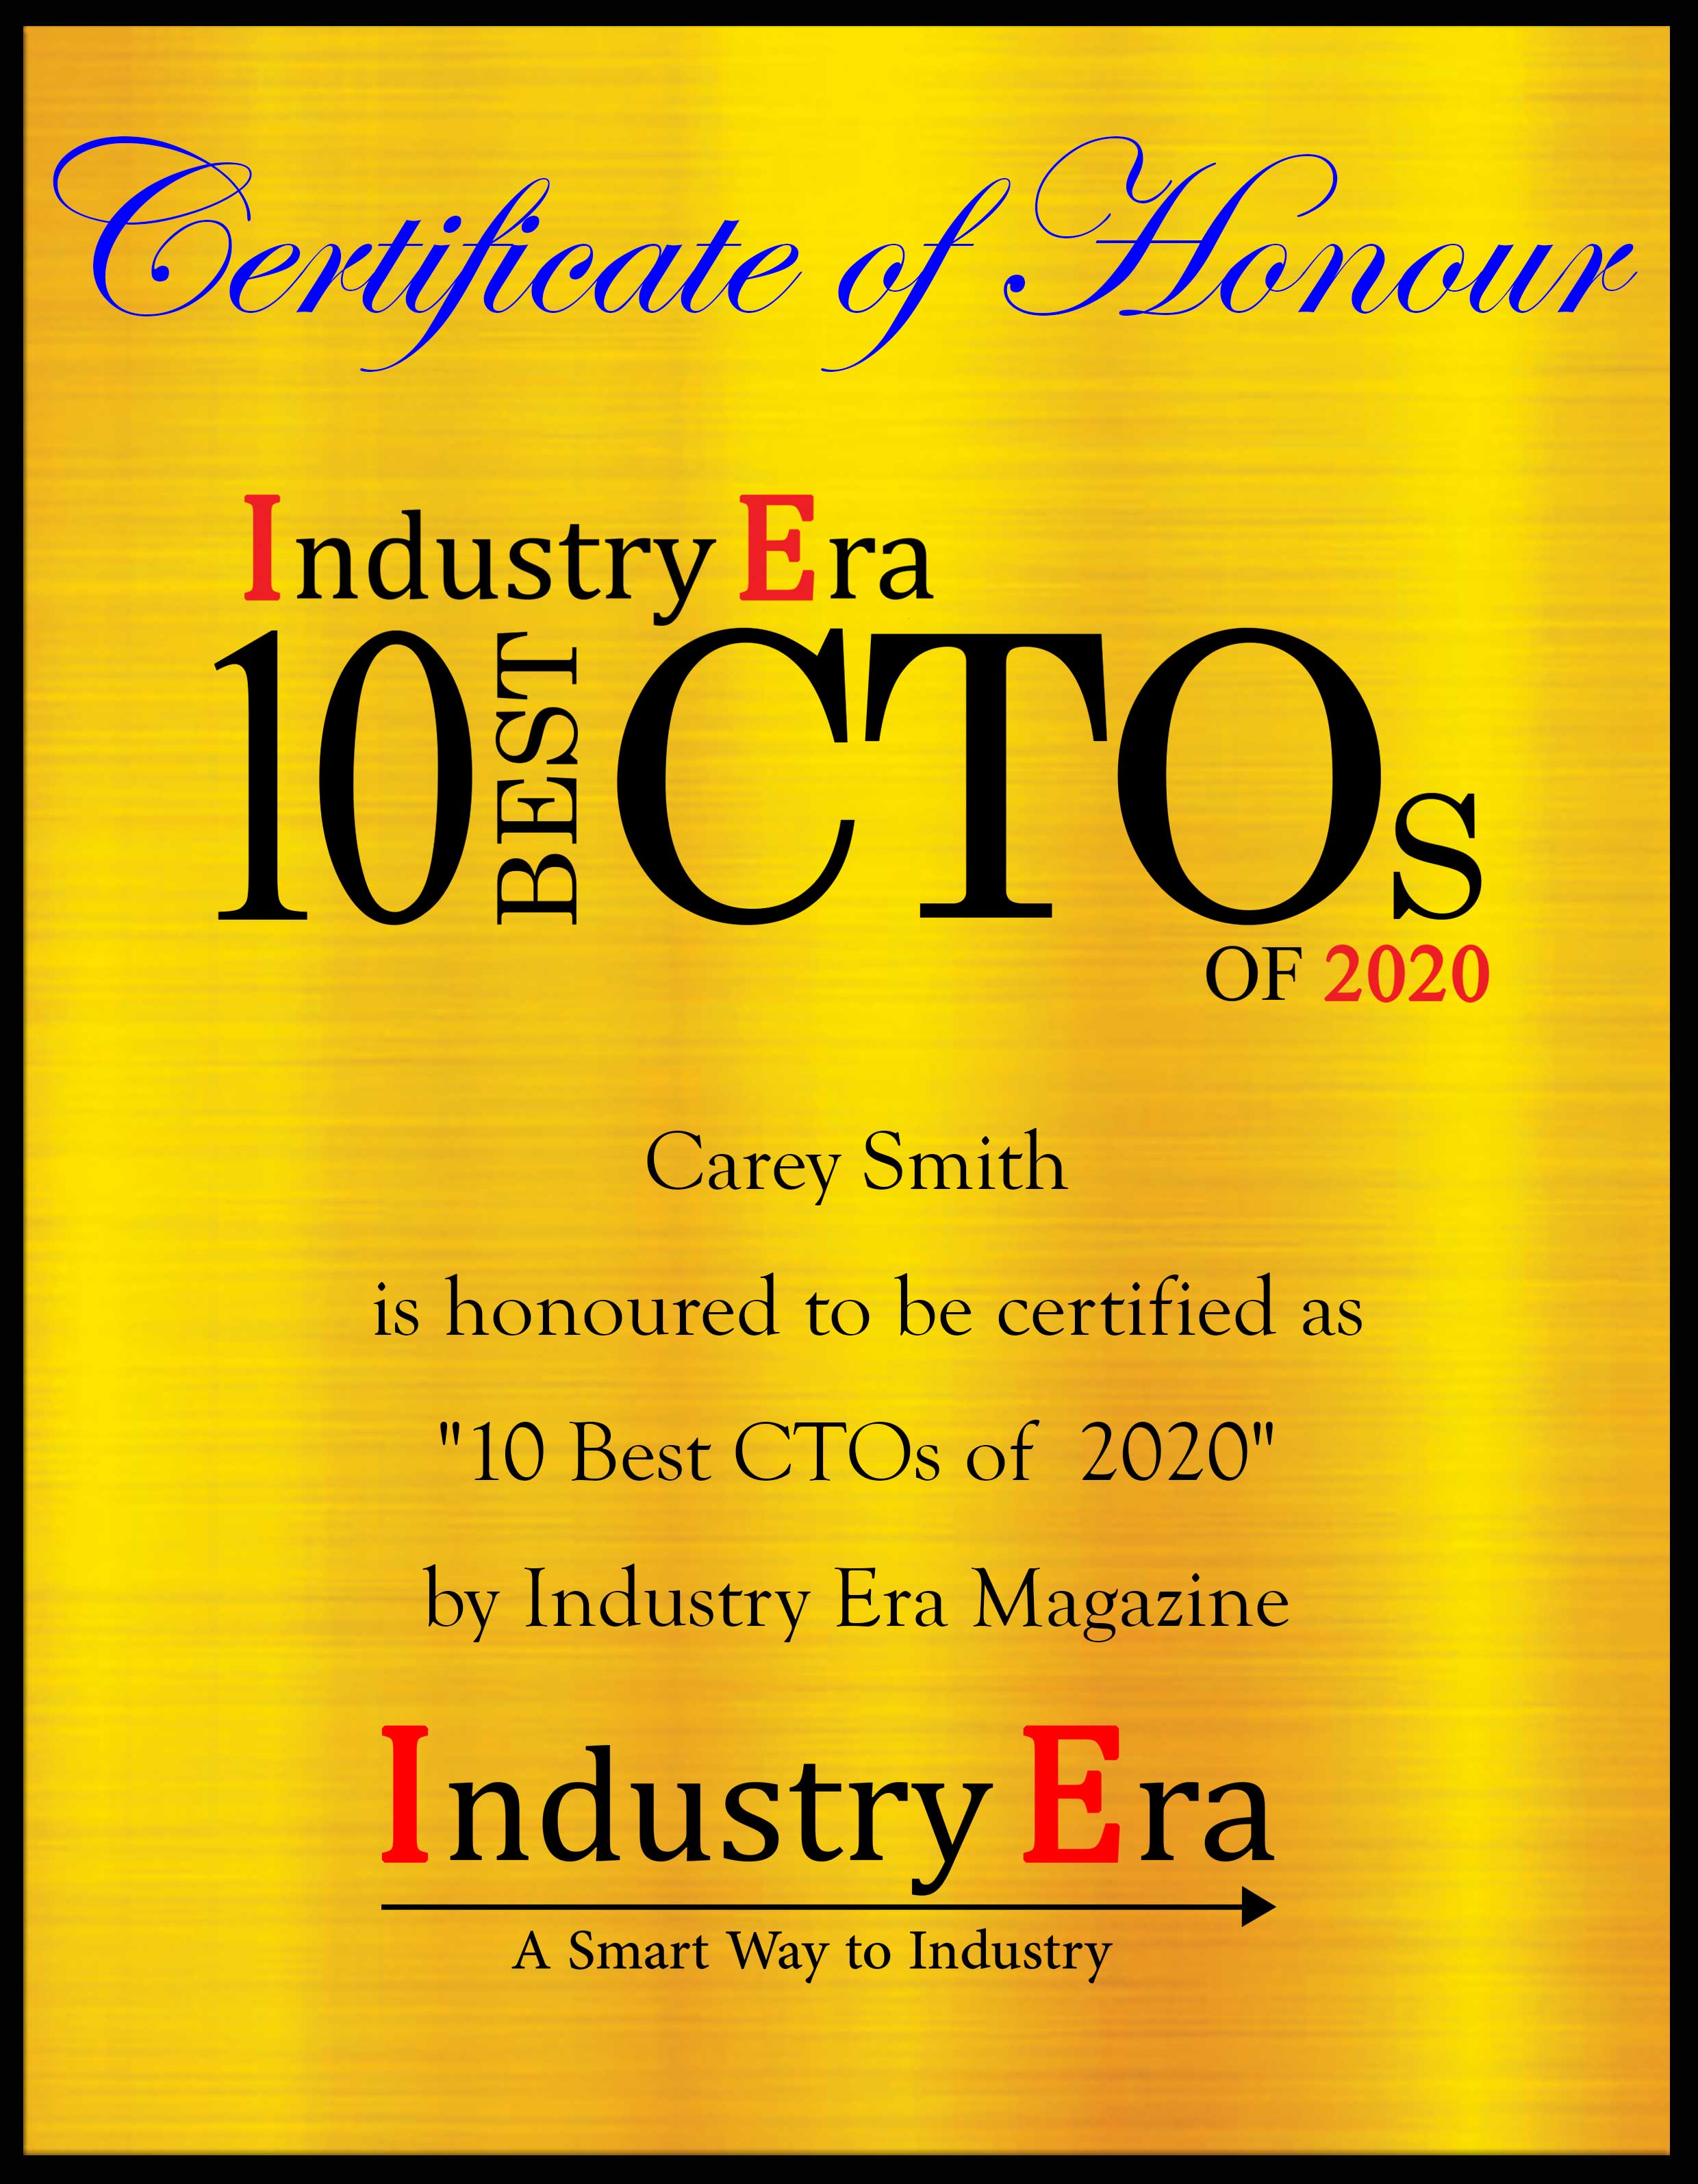 Carey Smith VP CTO Constellation Certificate